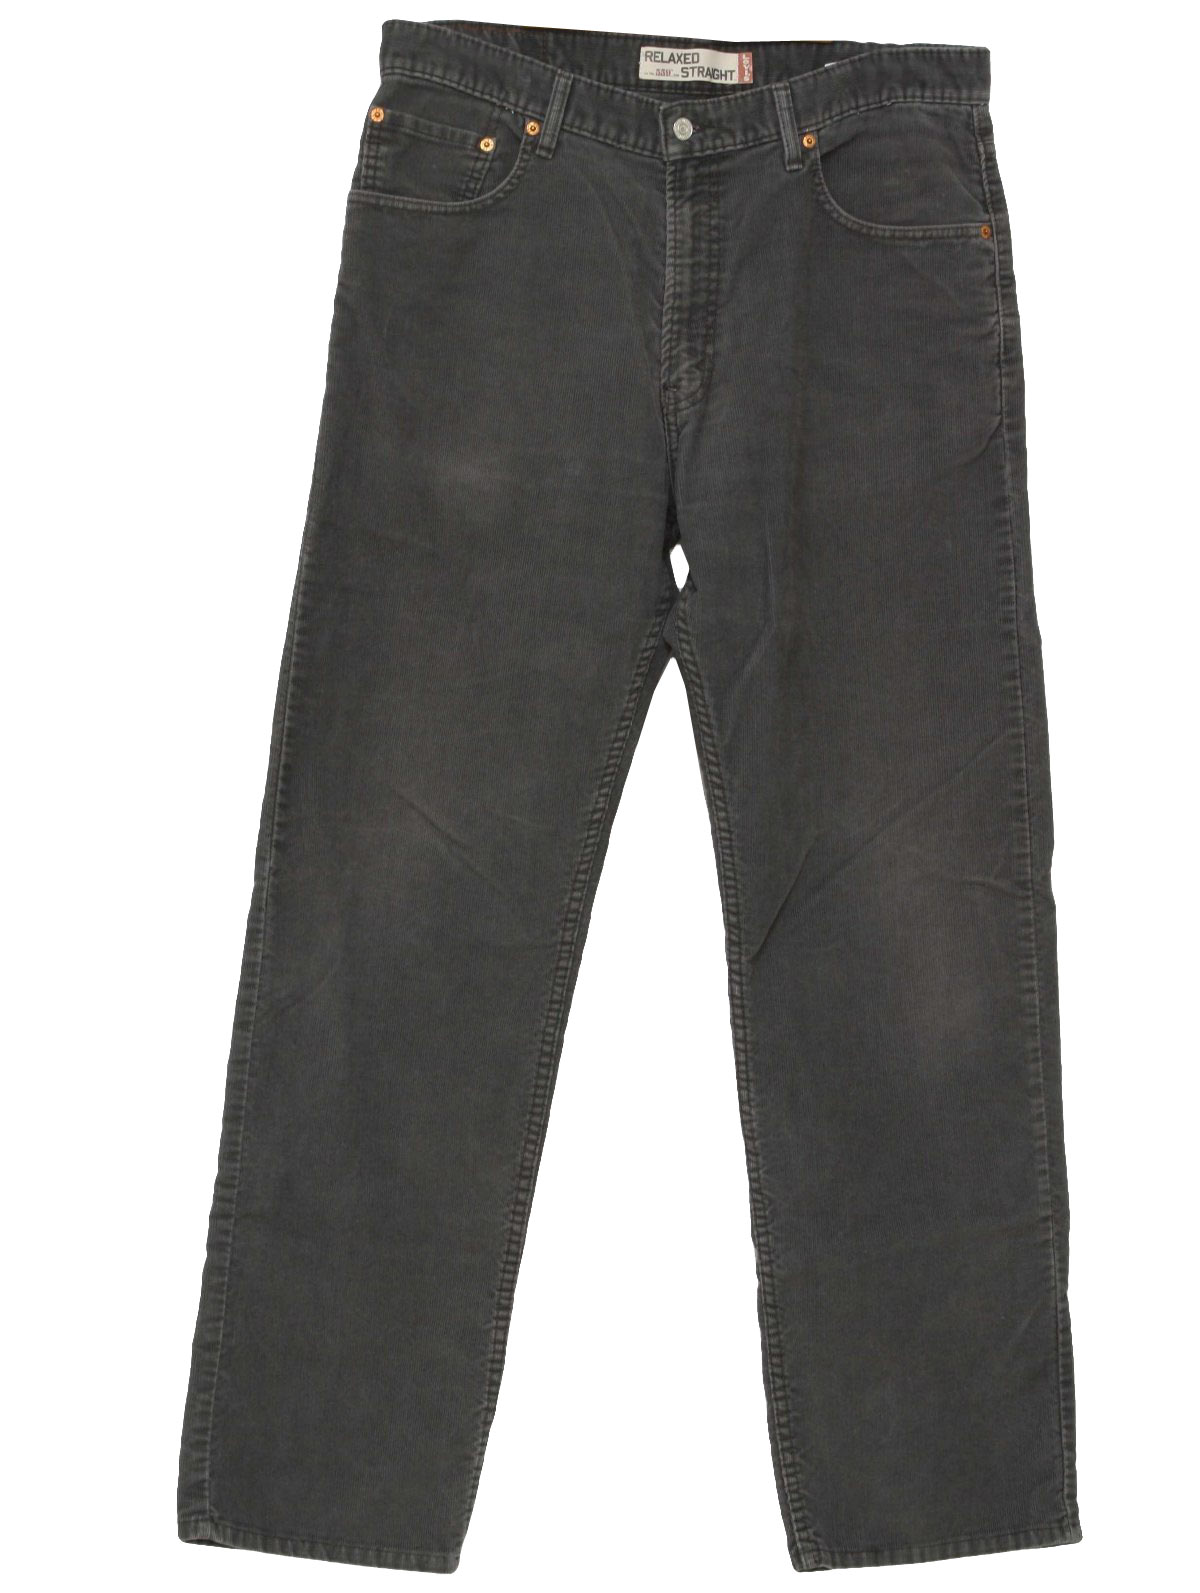 Vintage Levis Nineties Pants: 90s -Levis- Mens dark gray cotton ...